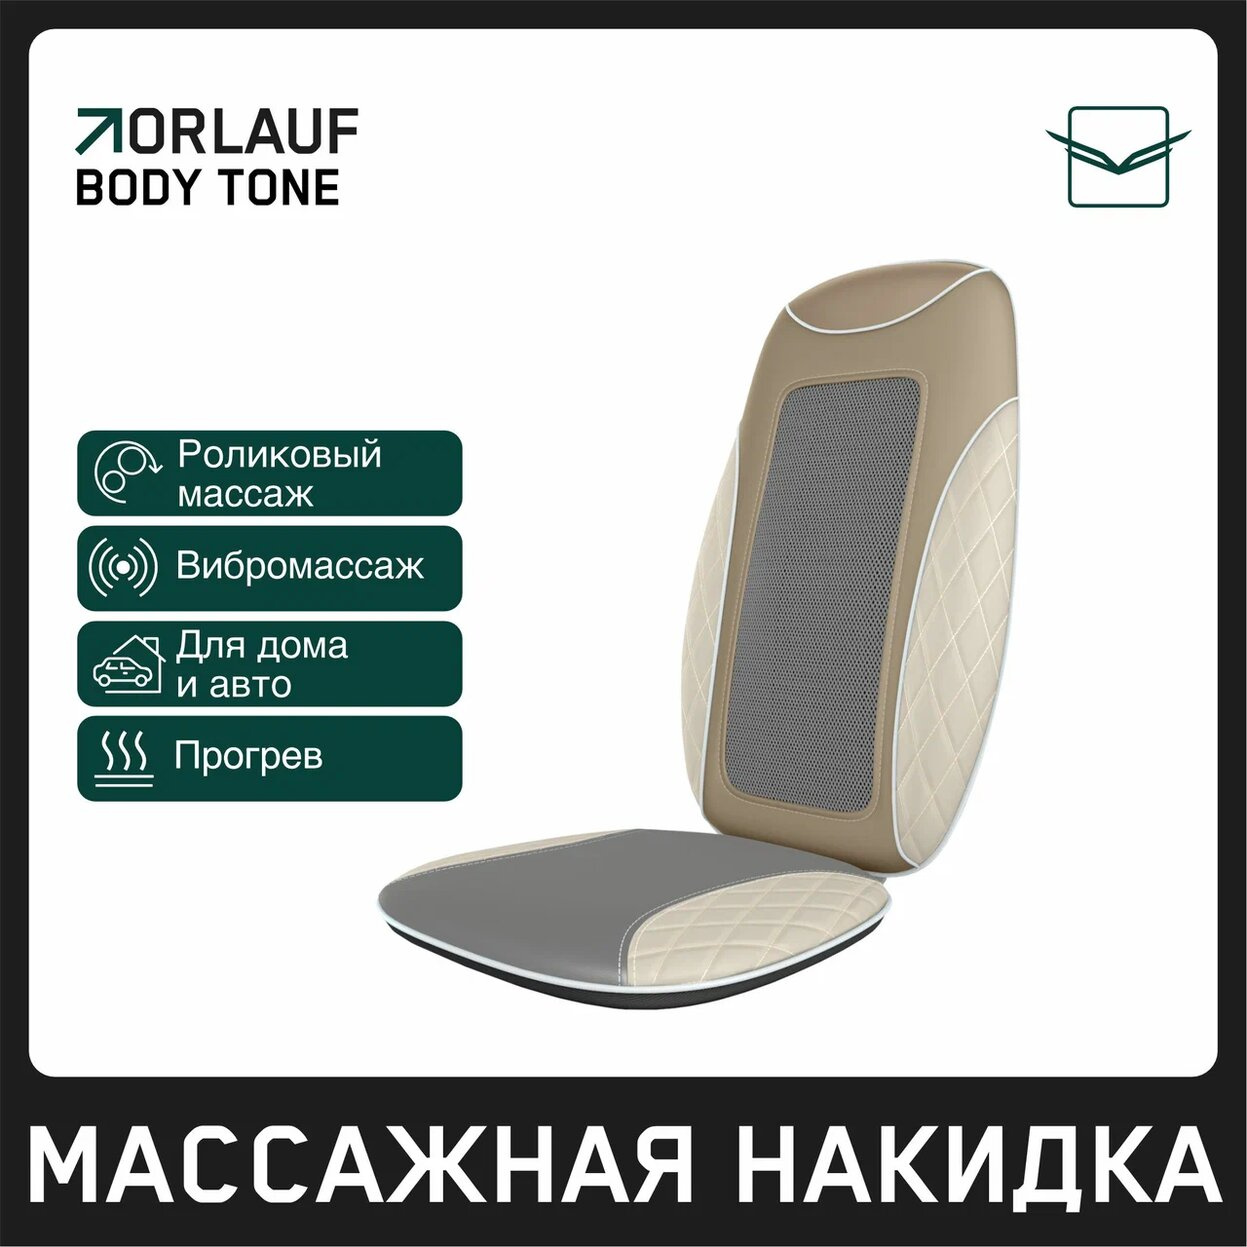 Orlauf Body Tone из каталога устройств для массажа в Уфе по цене 15400 ₽